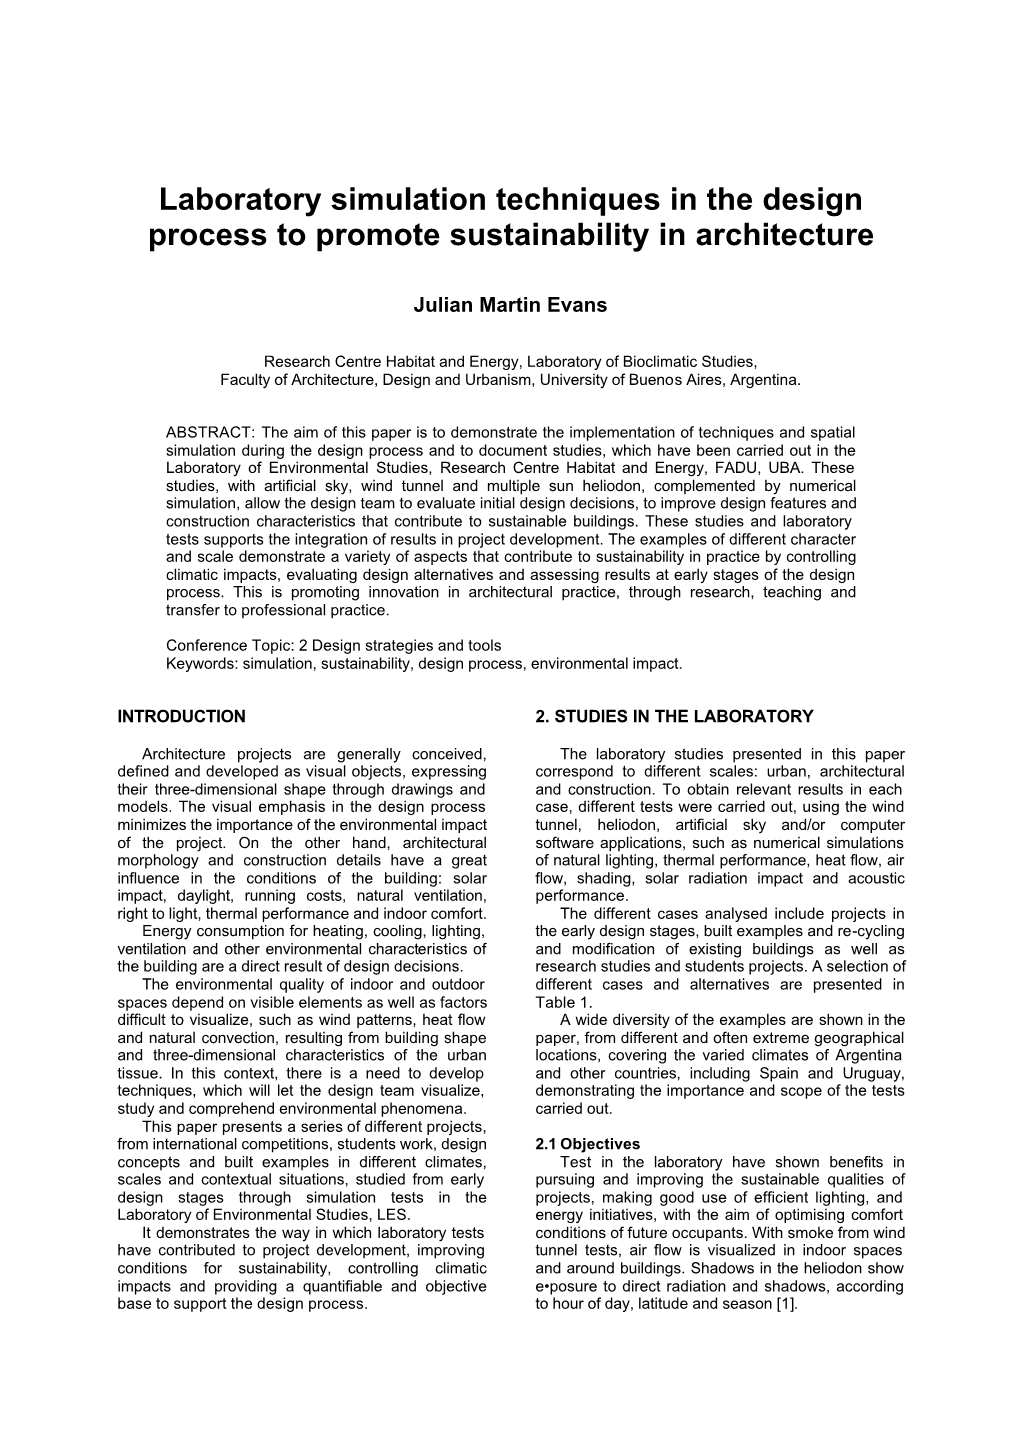 Laboratory Simulation Techniques in the Design Process to Promote Sustainability in Architecture